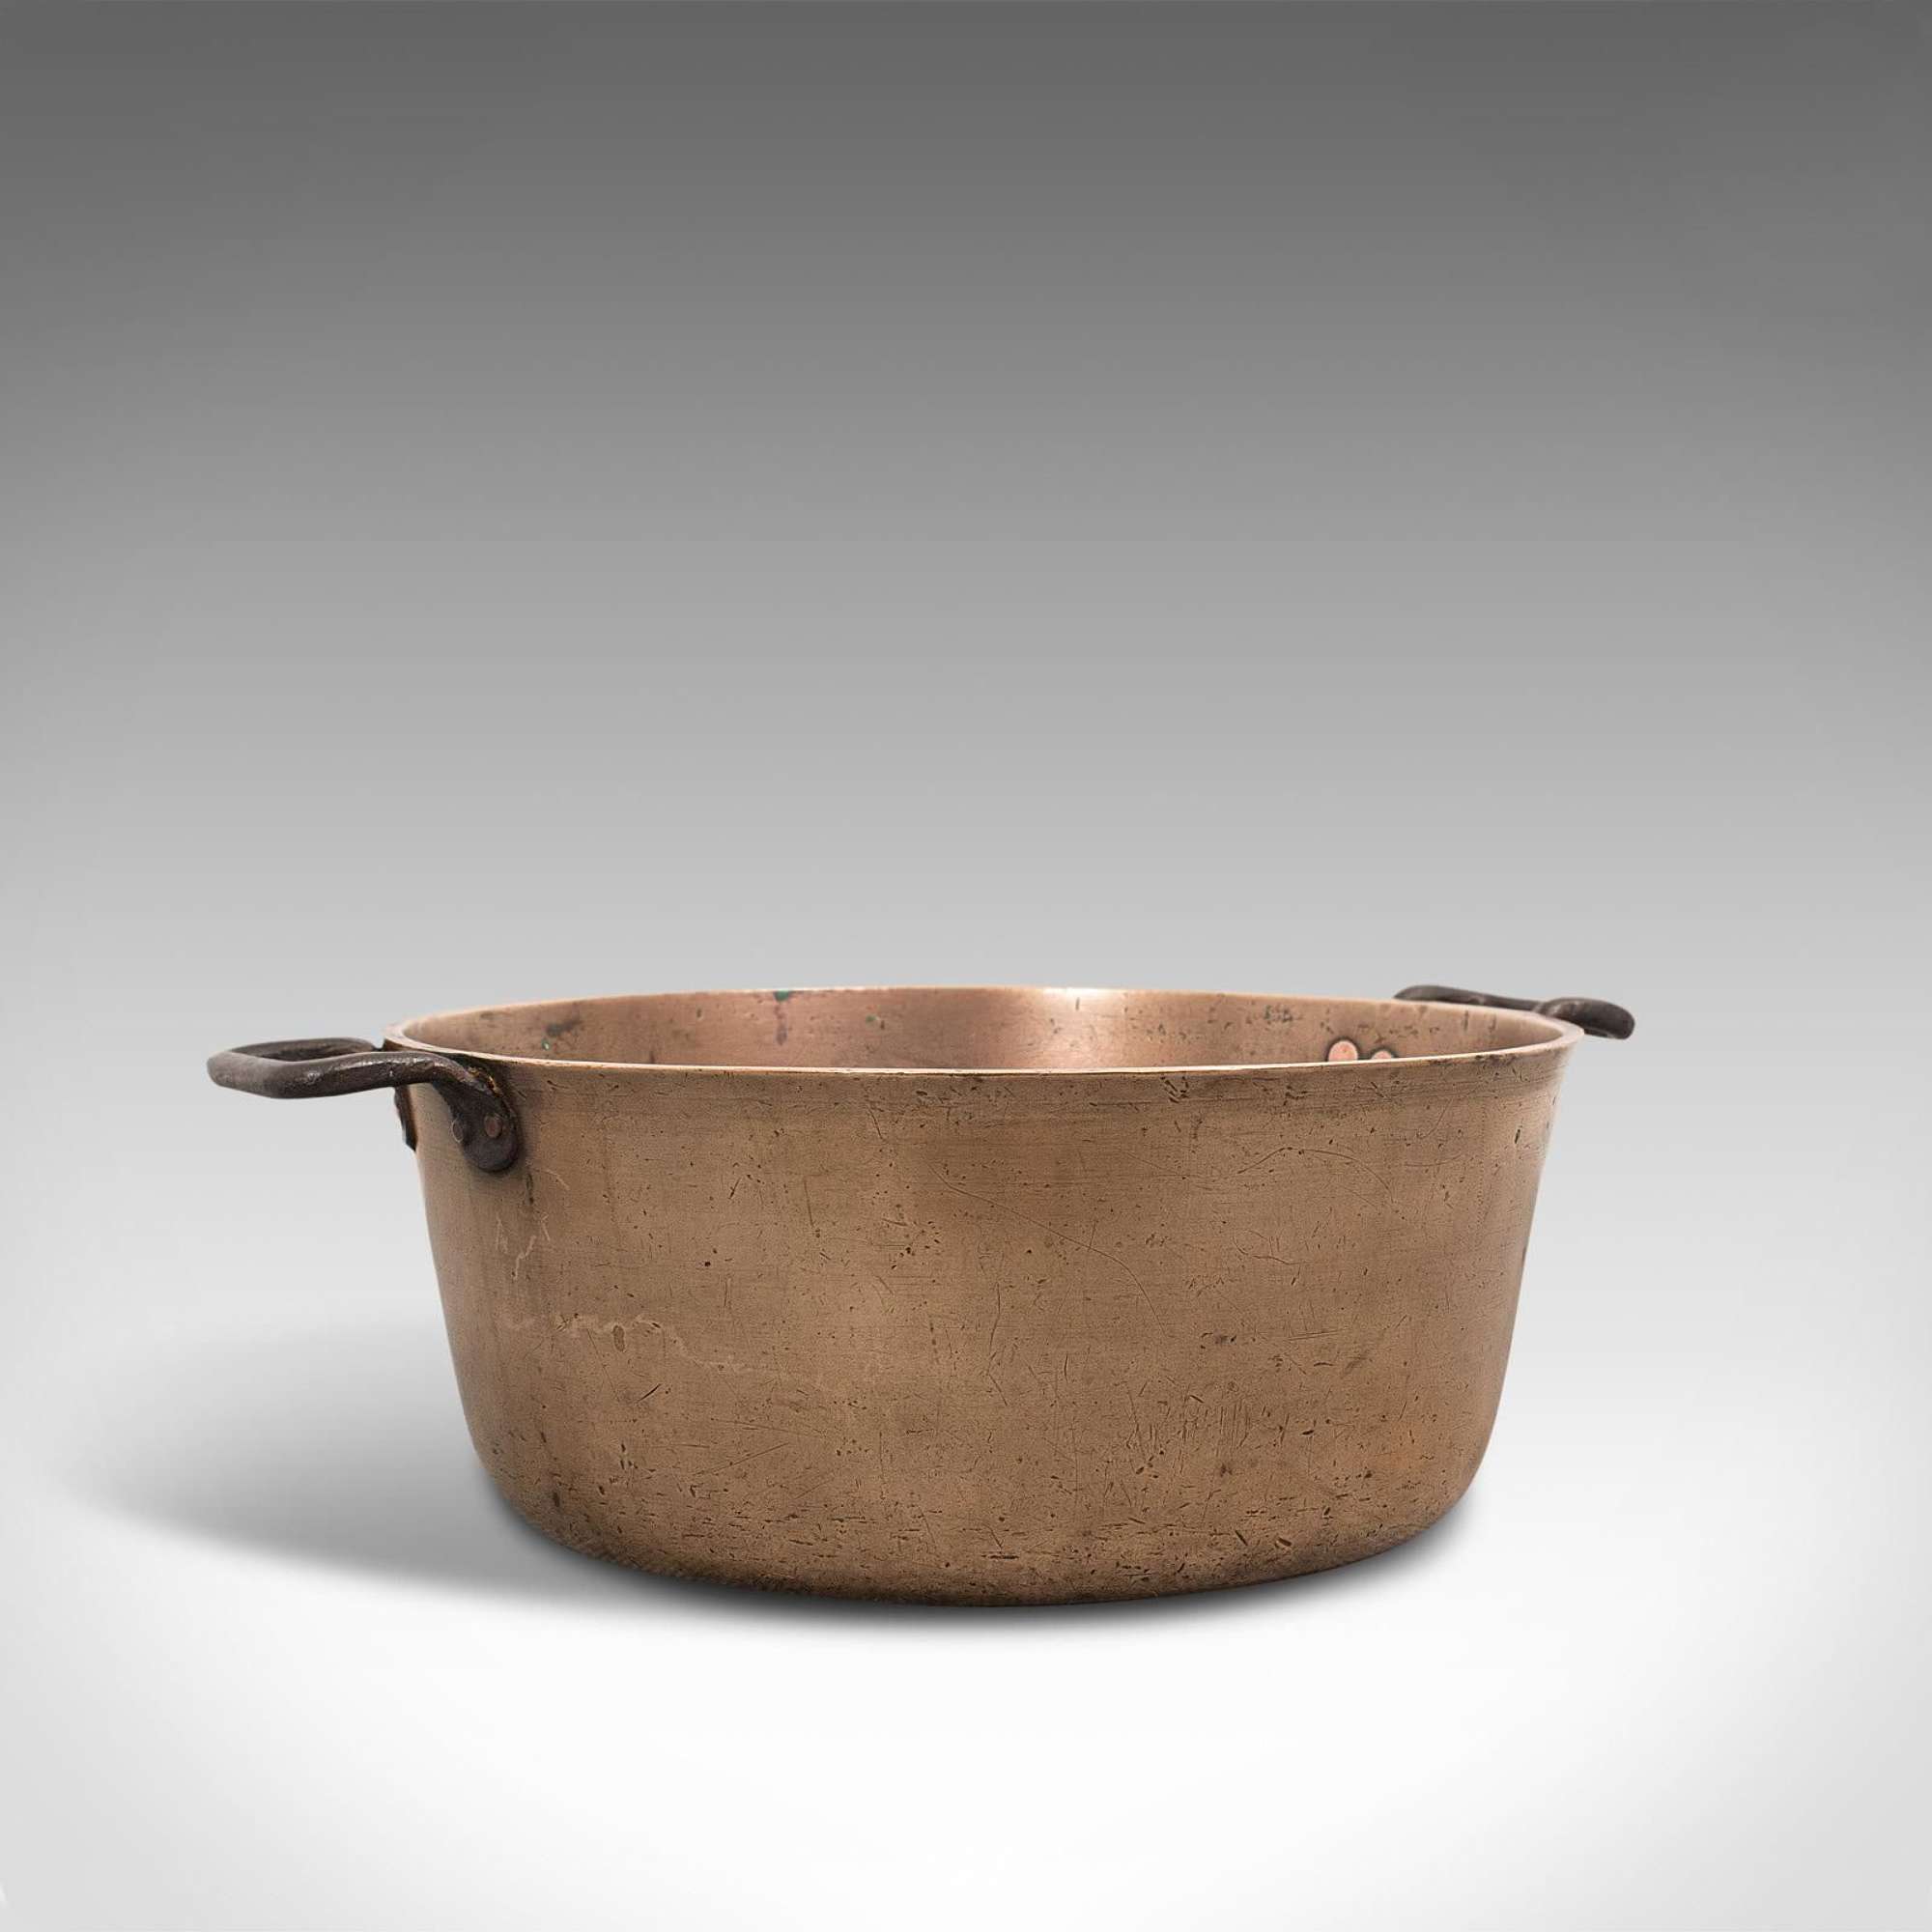 Antique Jam Pan, English, Bronze, Preserves Cooking Pot C.1800